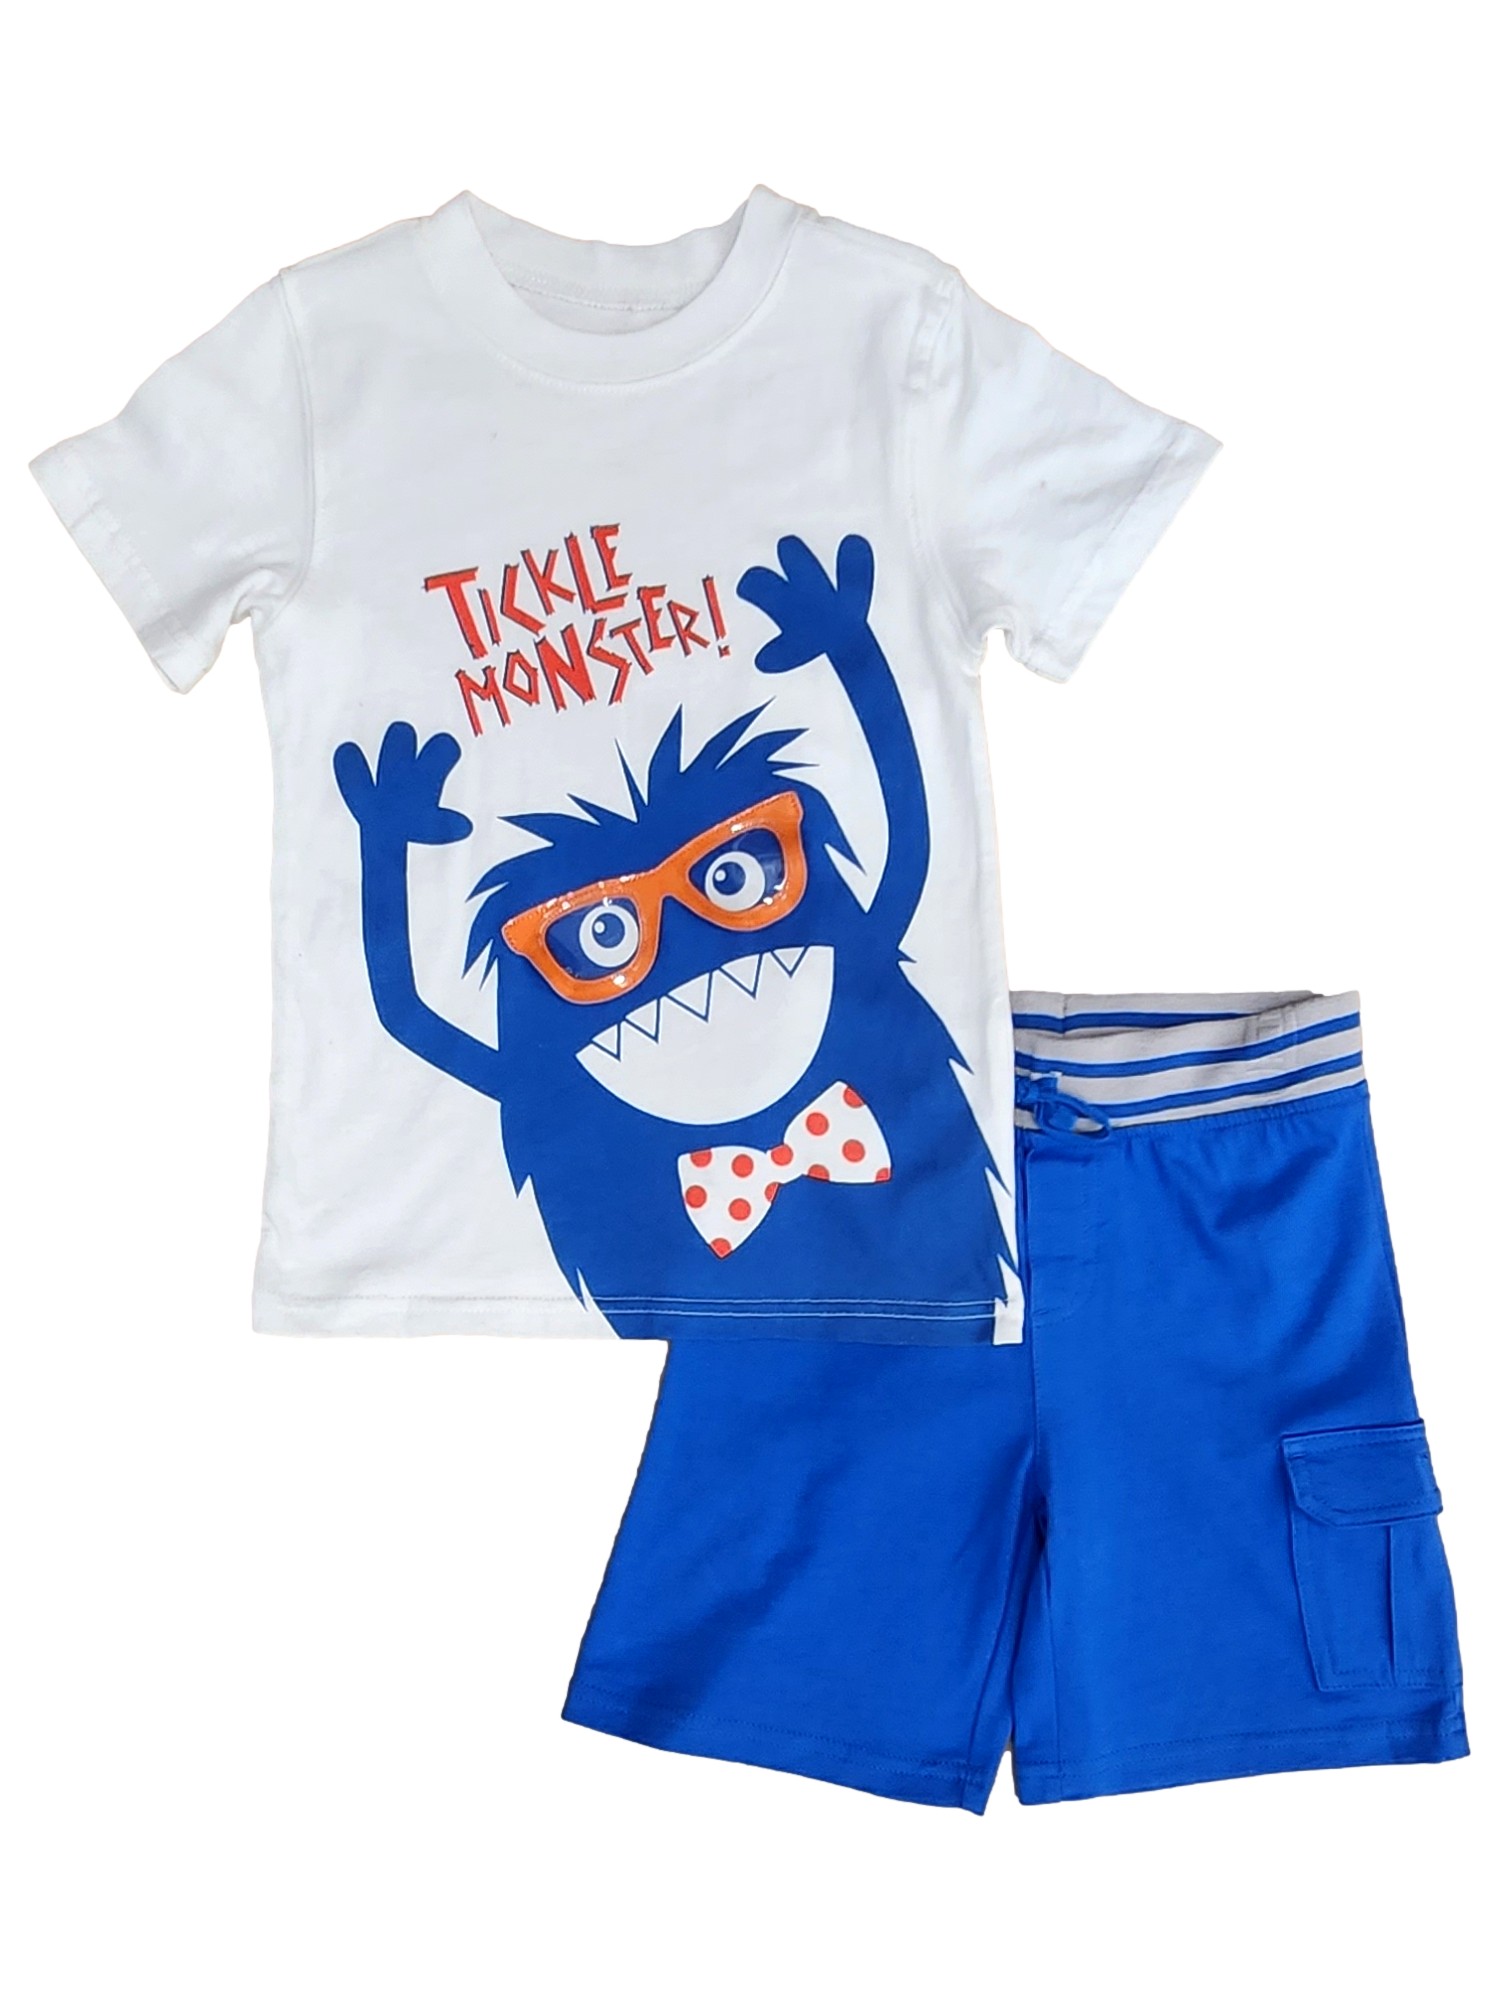 Toughskins Boys Blue & White Tickle Monster Tee Shirt T-Shirt & Shorts Set 4T